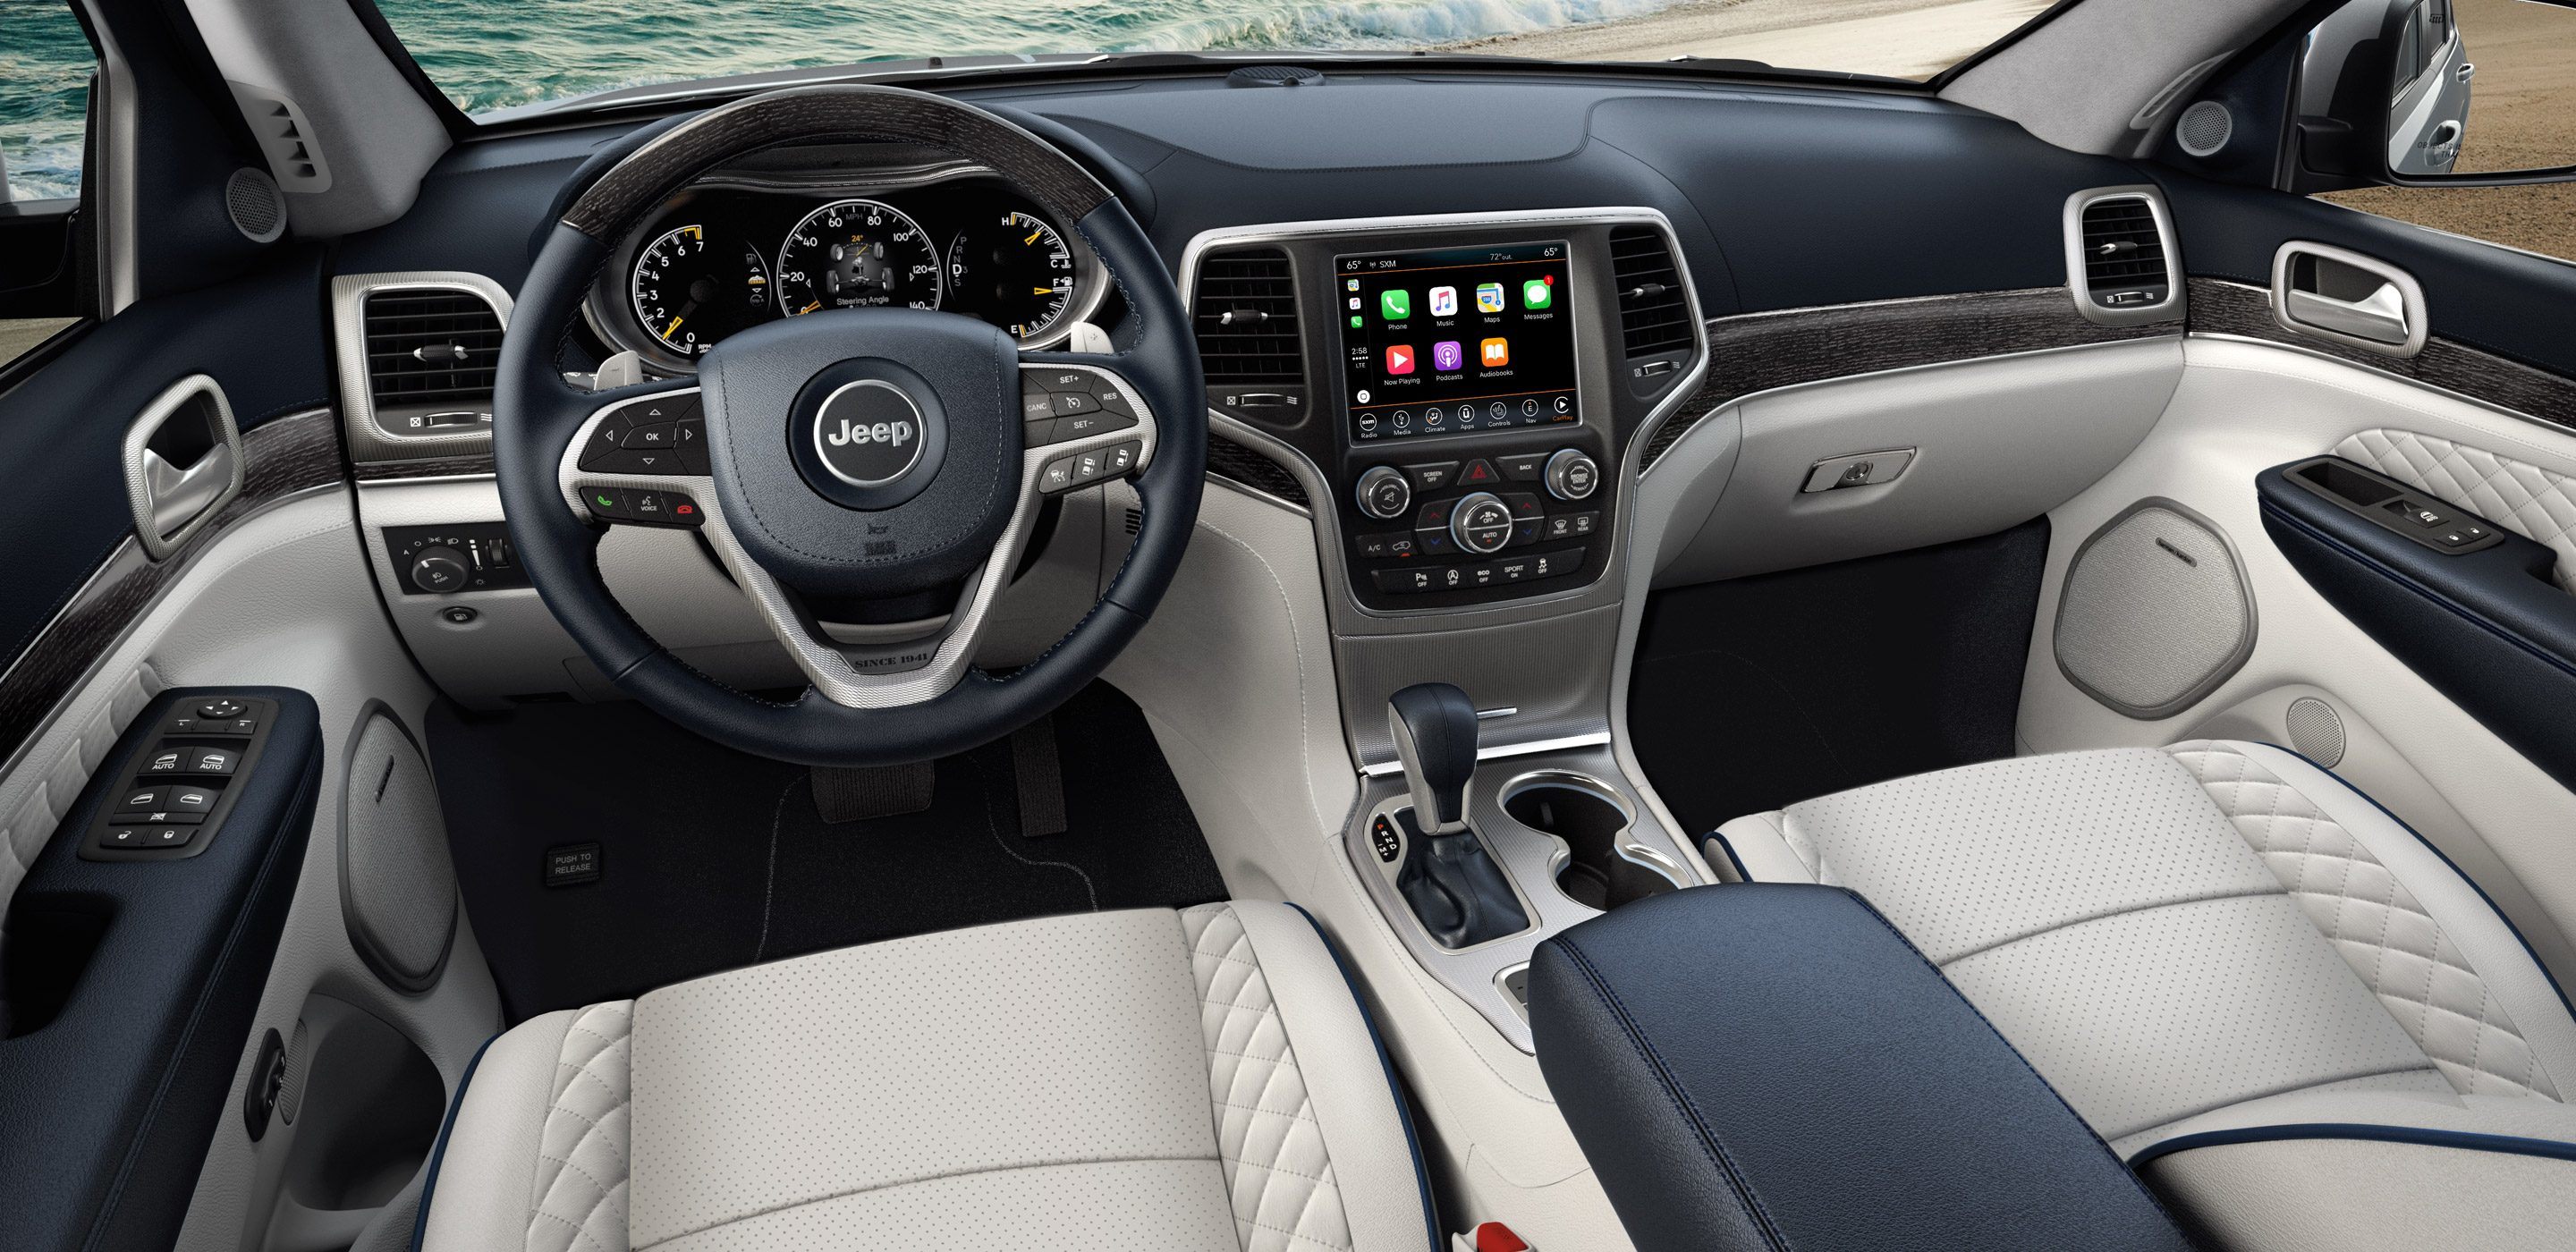 2018 Jeep Grand Cherokee SUV cockpit & dashboard interior